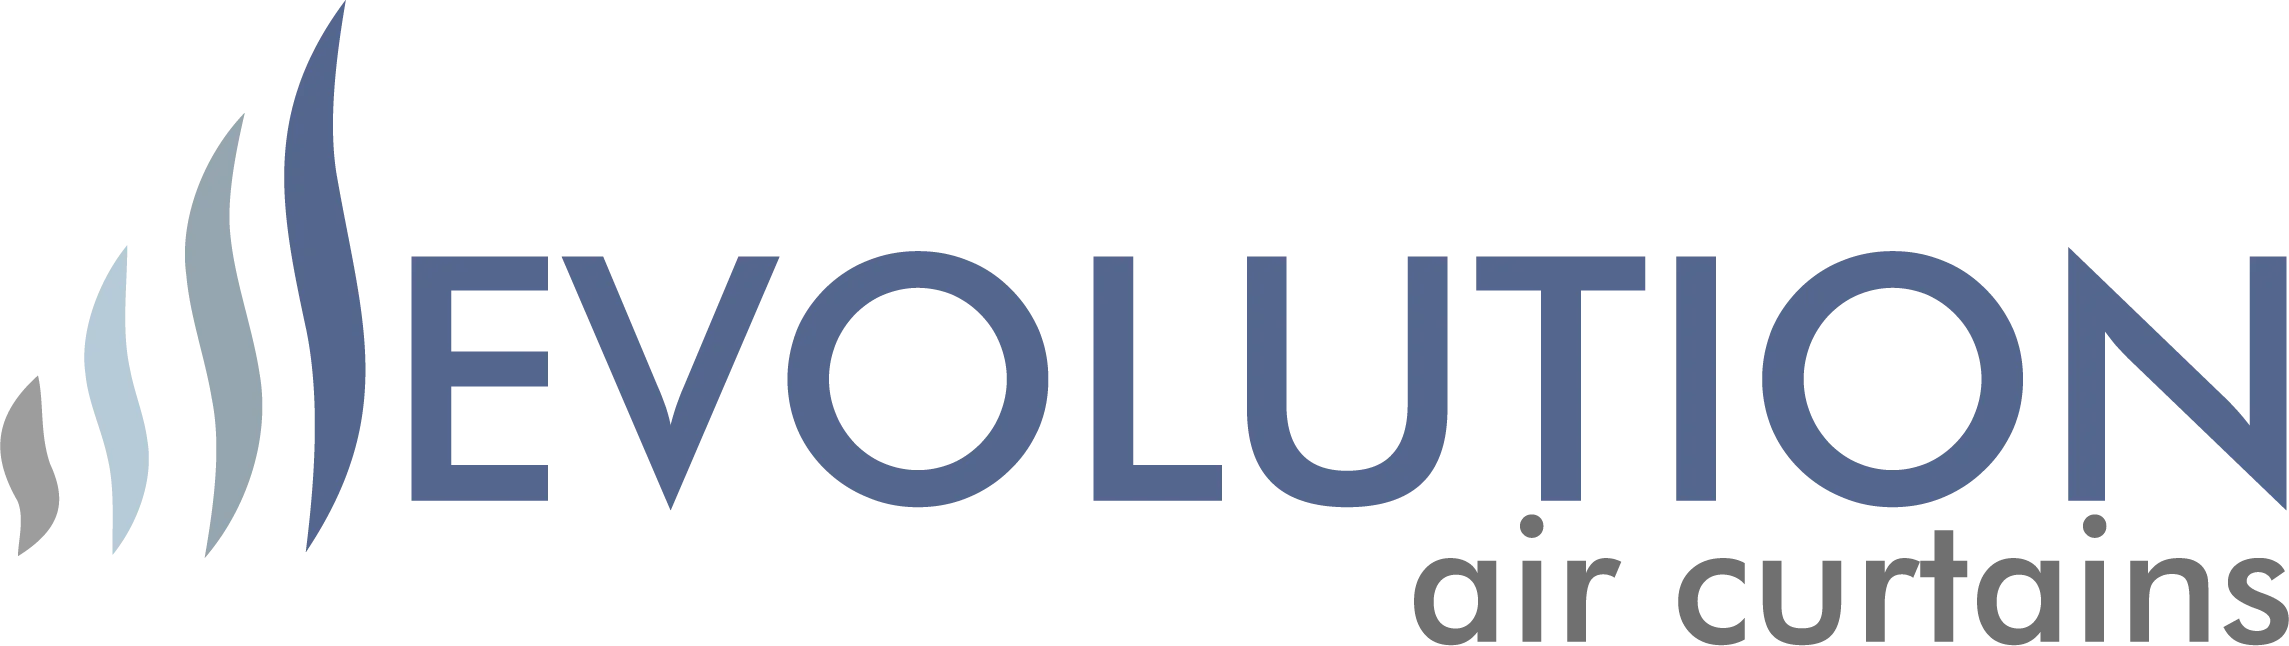 Logo Evolution